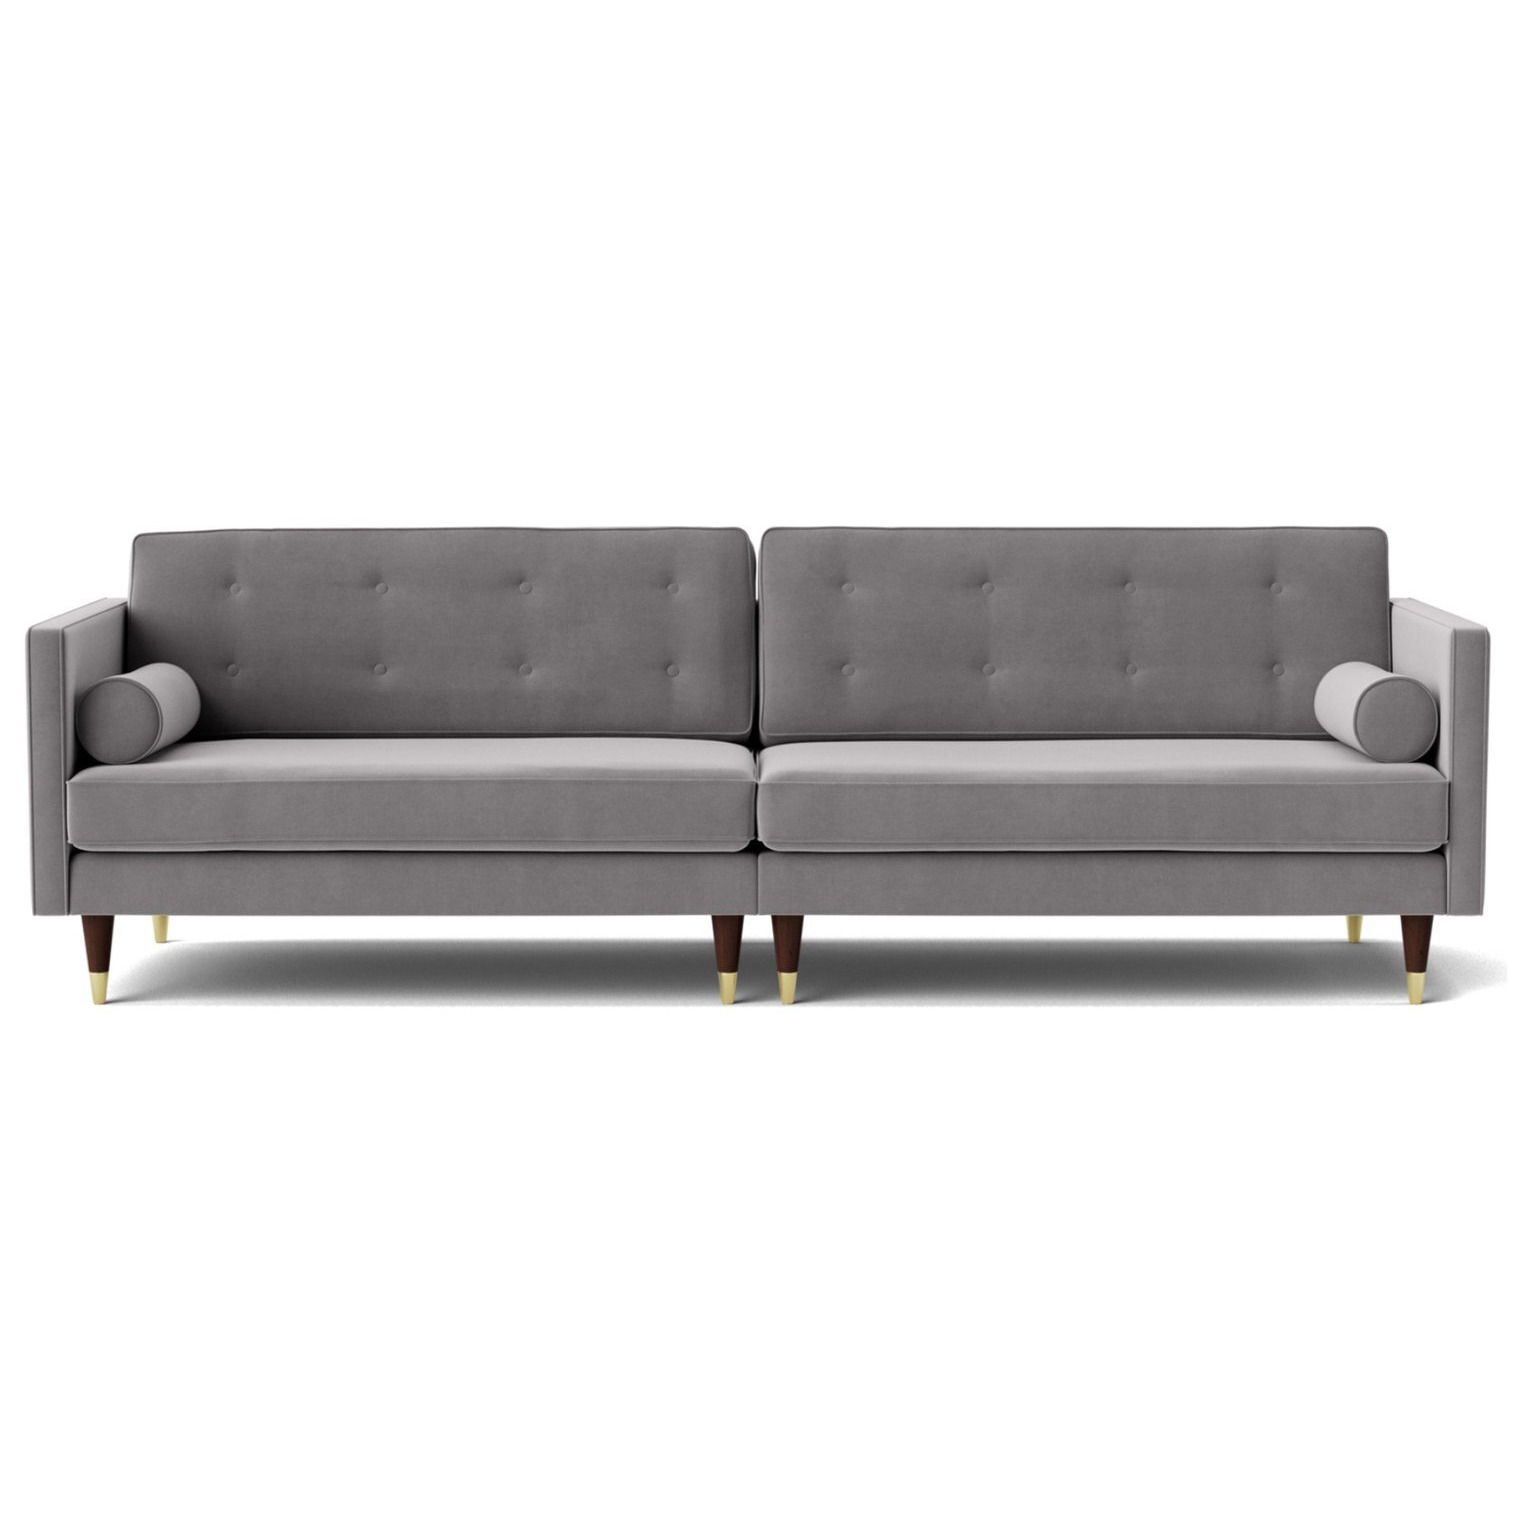 Swoon Porto Velvet 4 Seater Sofa - Silver Grey - image 1